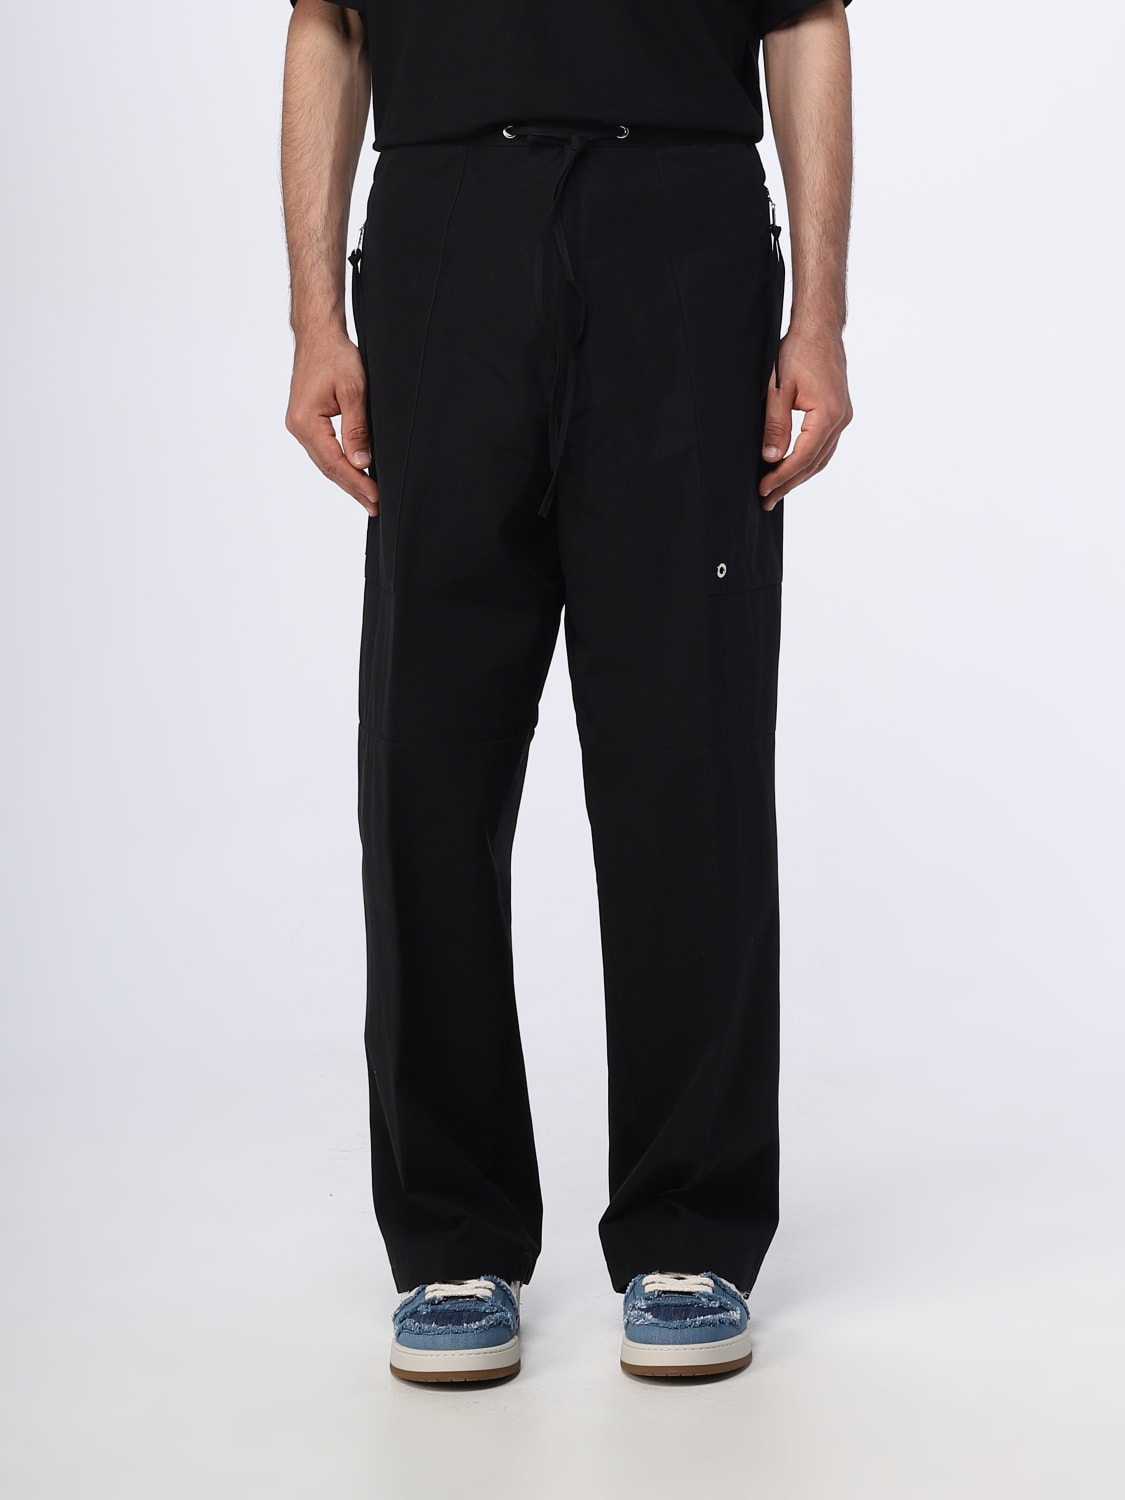 FENDI: cotton pants - Black | Fendi pants FB0836AMZ1 online on GIGLIO.COM